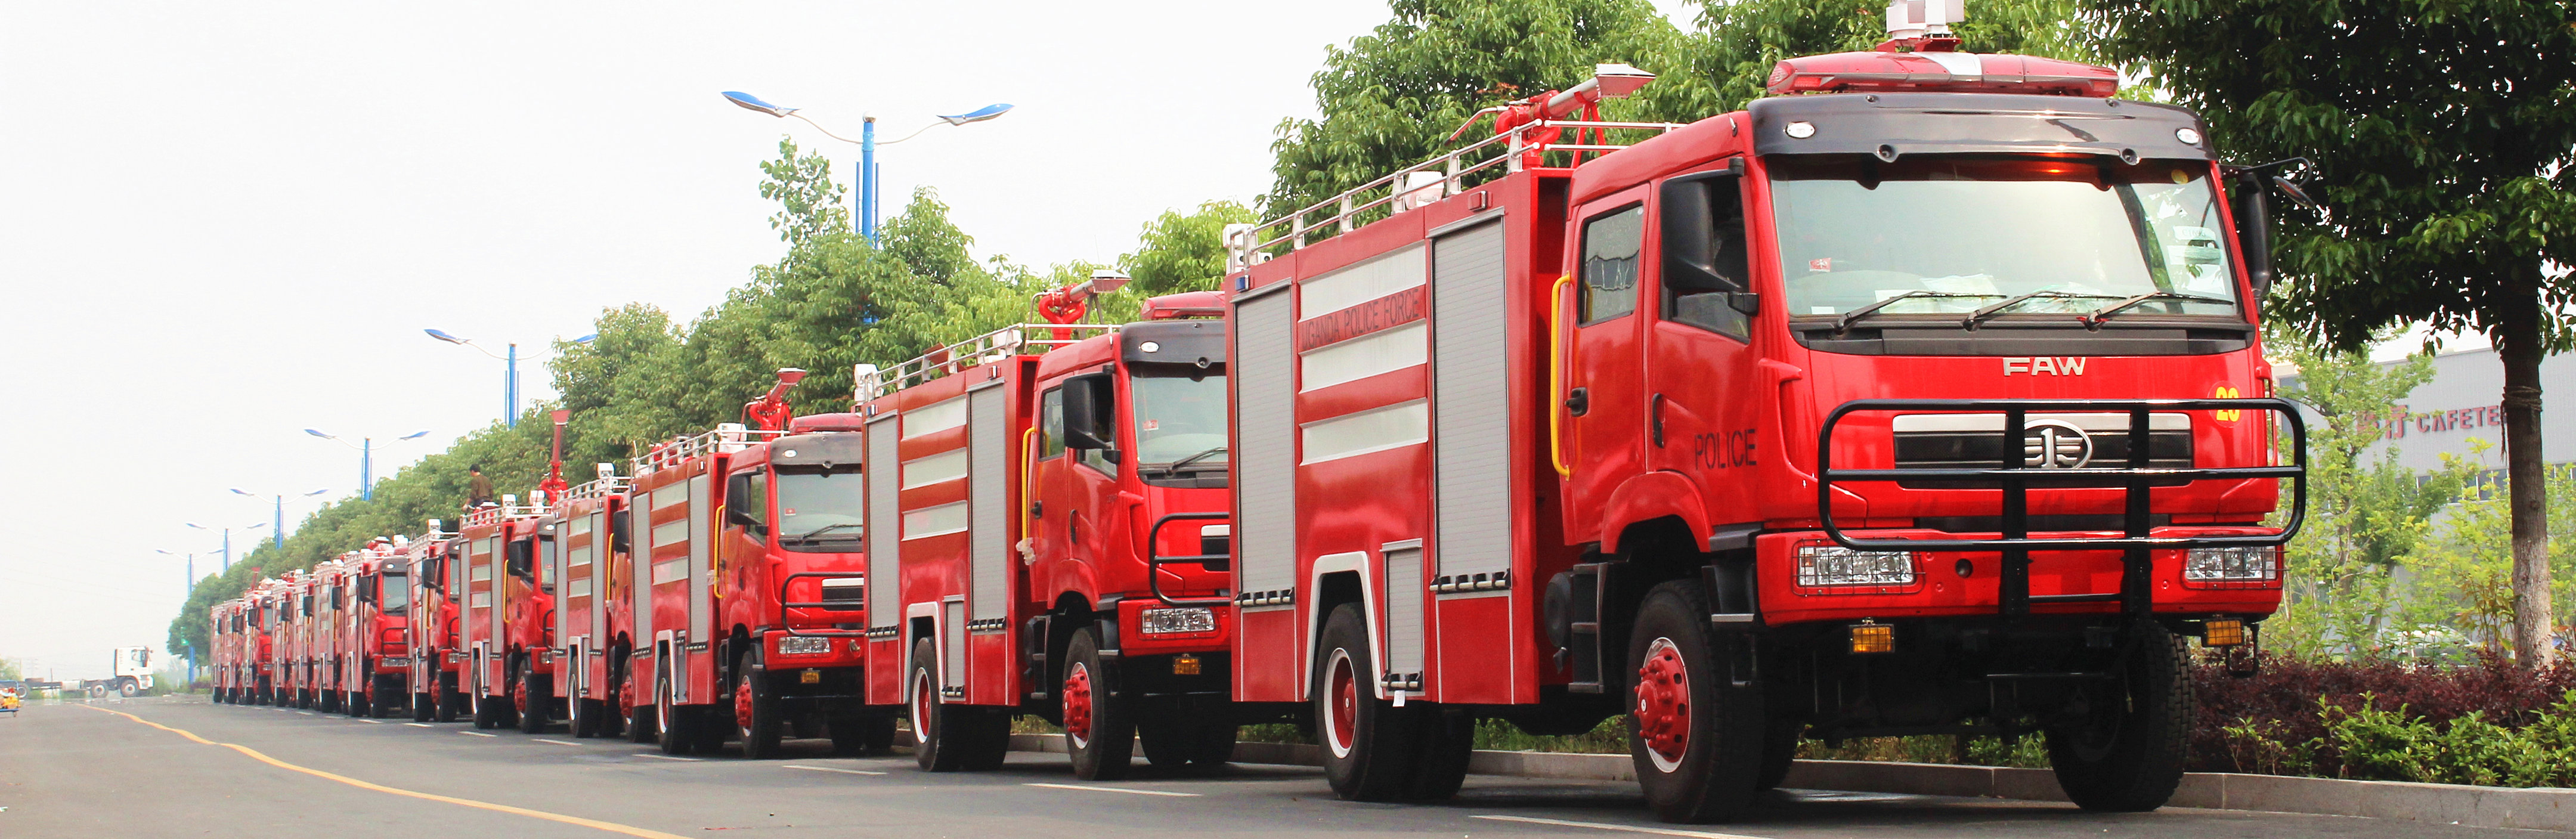 FAW RHD firefighting trucks supplier